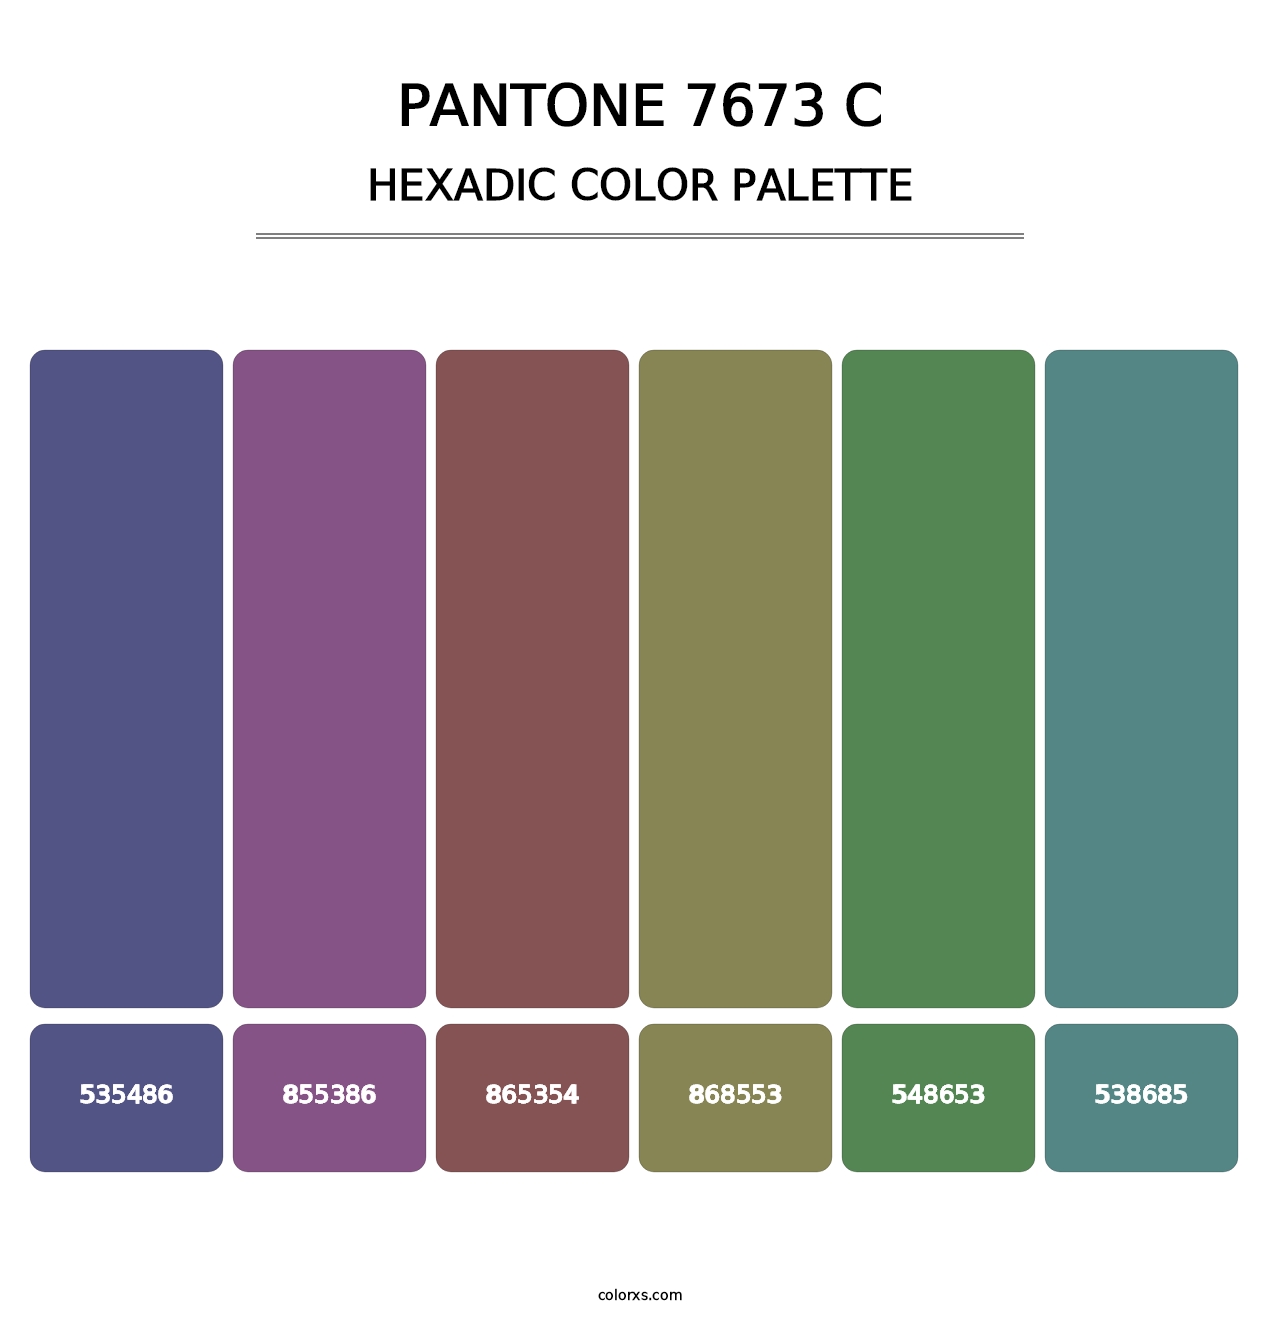 PANTONE 7673 C - Hexadic Color Palette